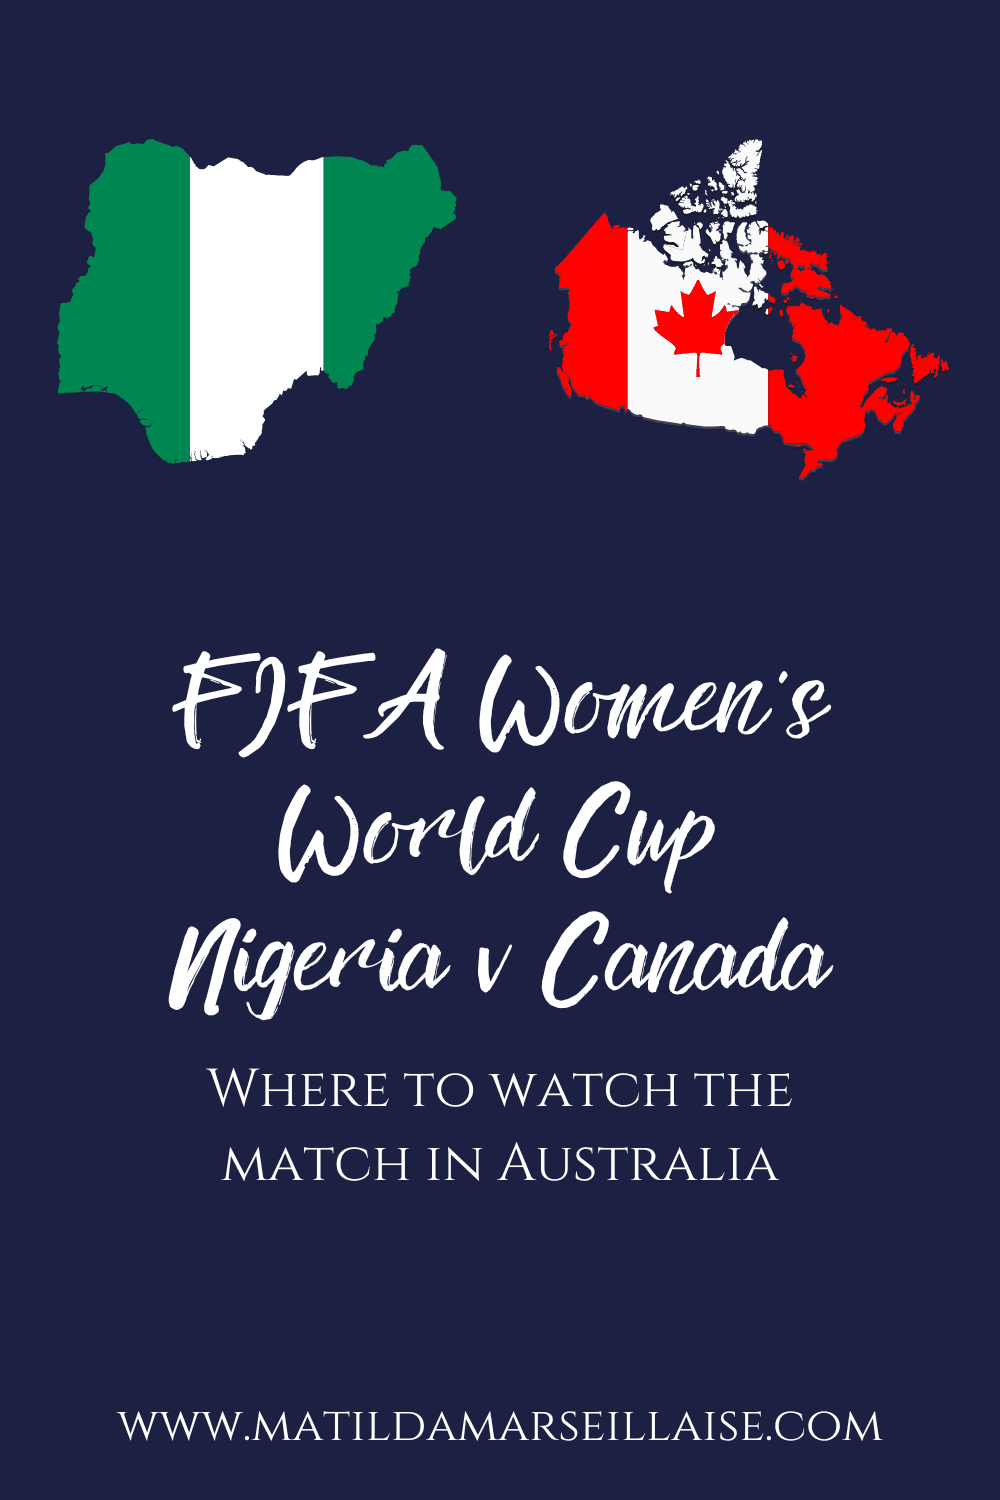 FIFA Women's World Cup Nigeria v Canada